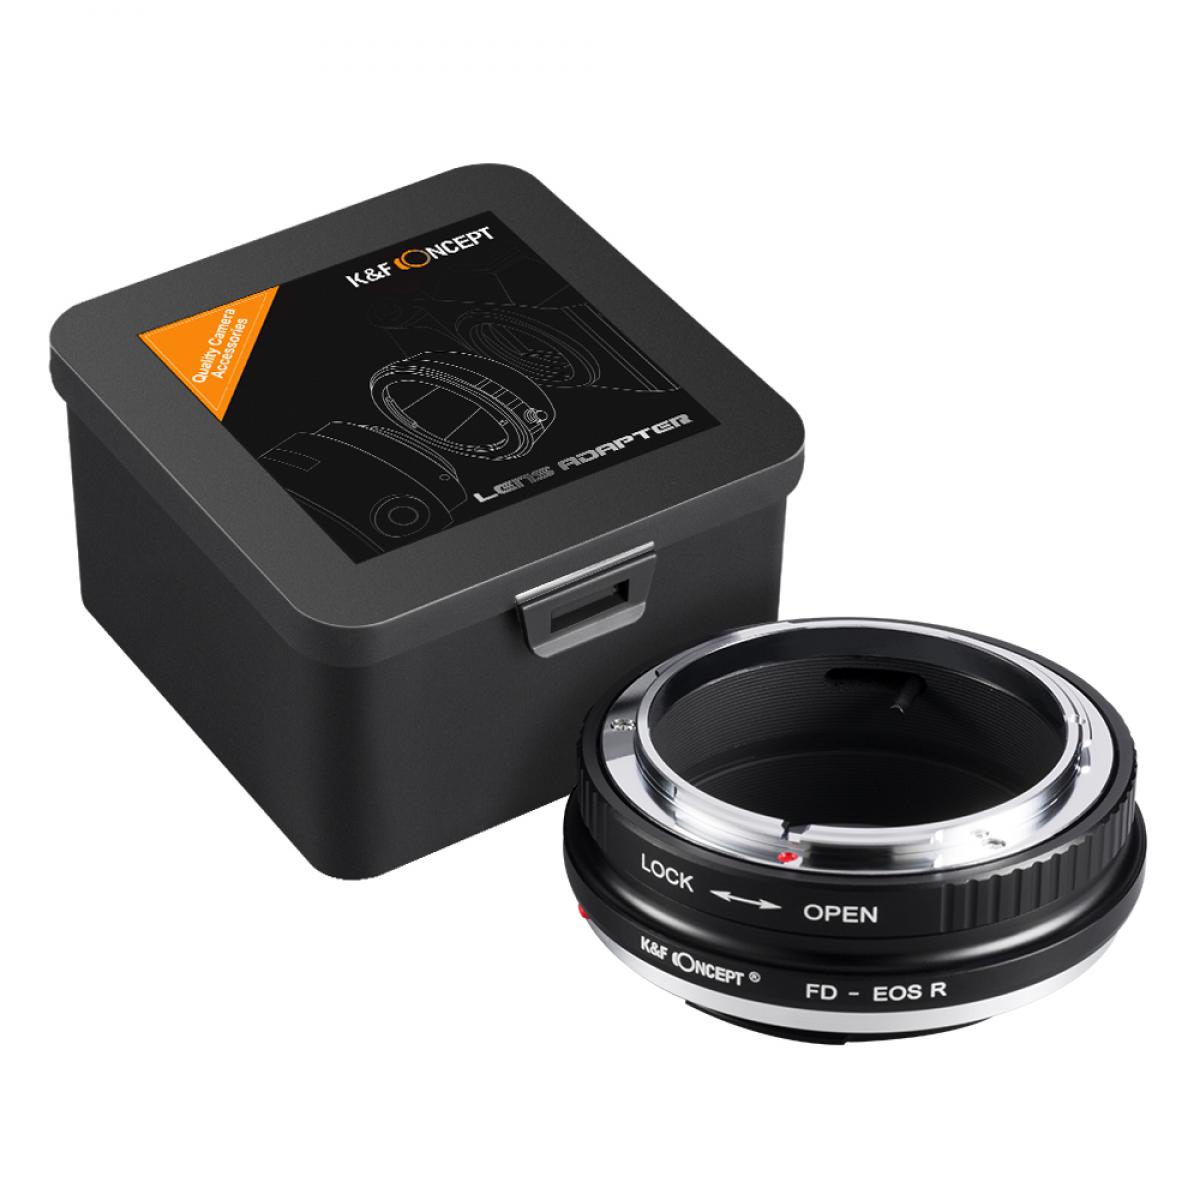 Canon FD Lens to Canon RF-Mount Camera Pro Lens Adapter